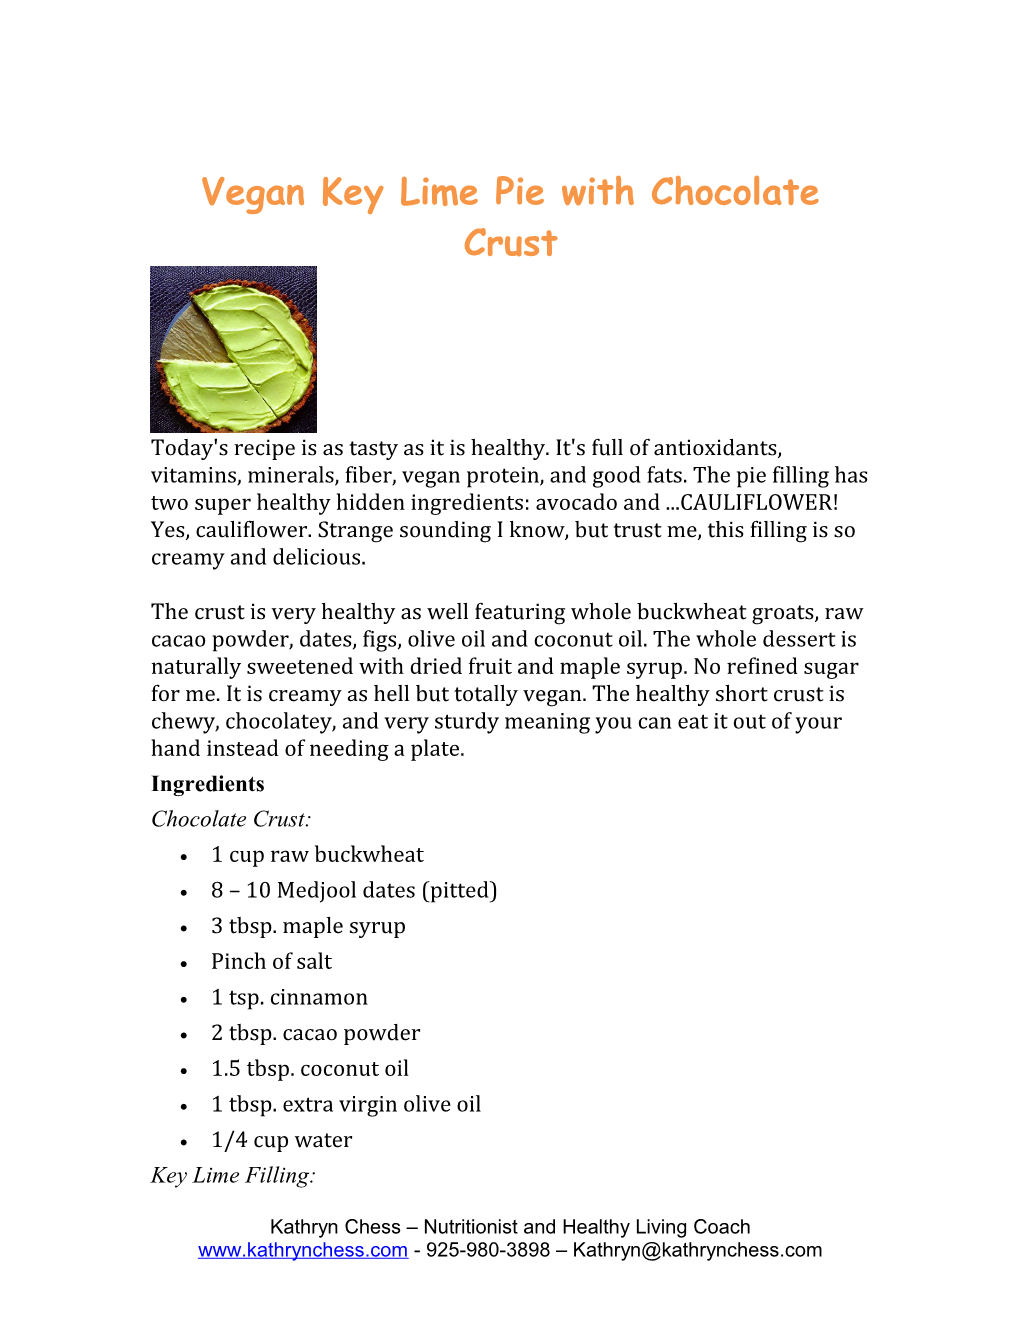 Vegan Key Lime Pie with Chocolate Crust